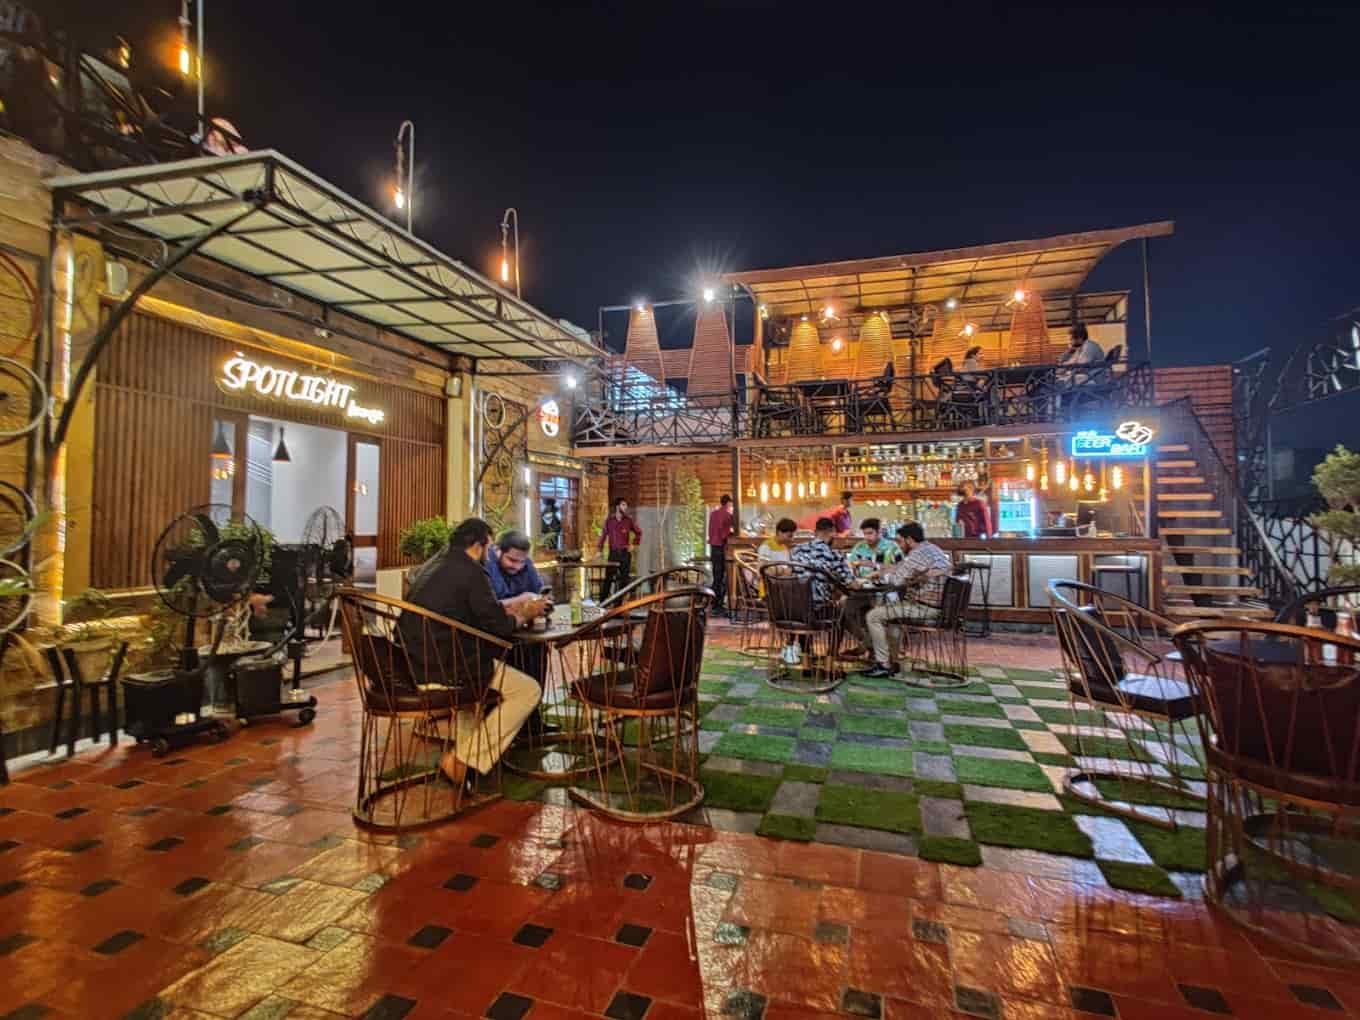 Cafe Spotlight Lahore